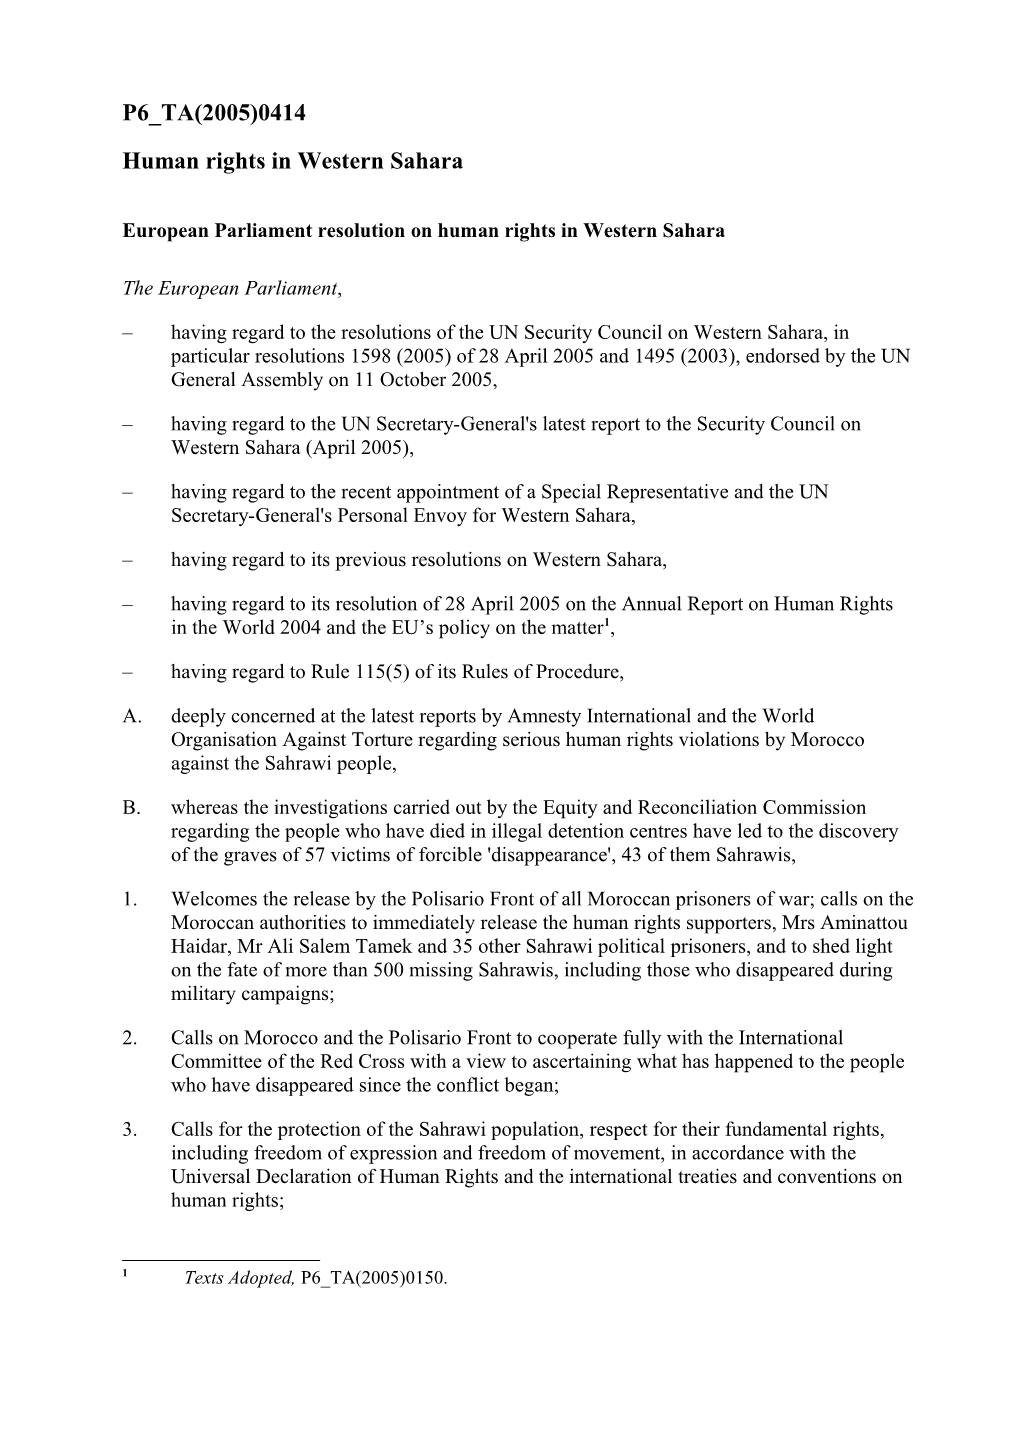 Human Rights in Western Sahara